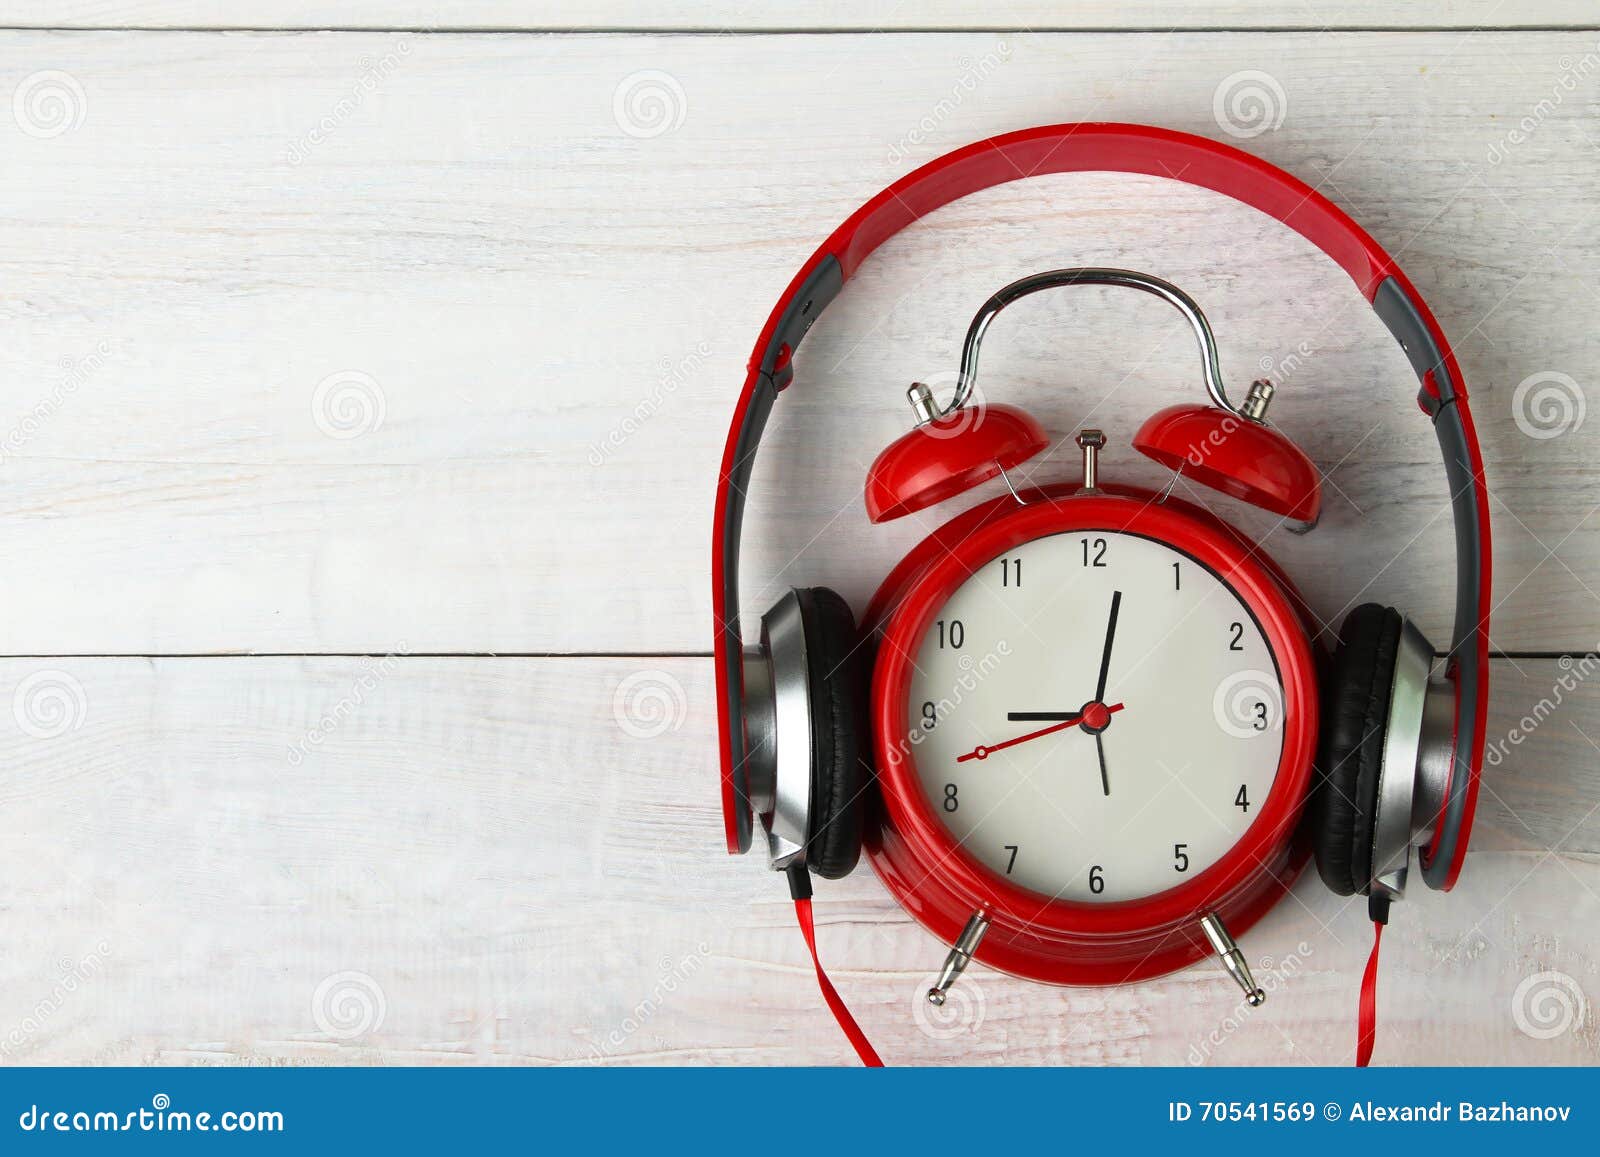 Headphones And Alarm Clock Stock Image Image Of Audio 70541569